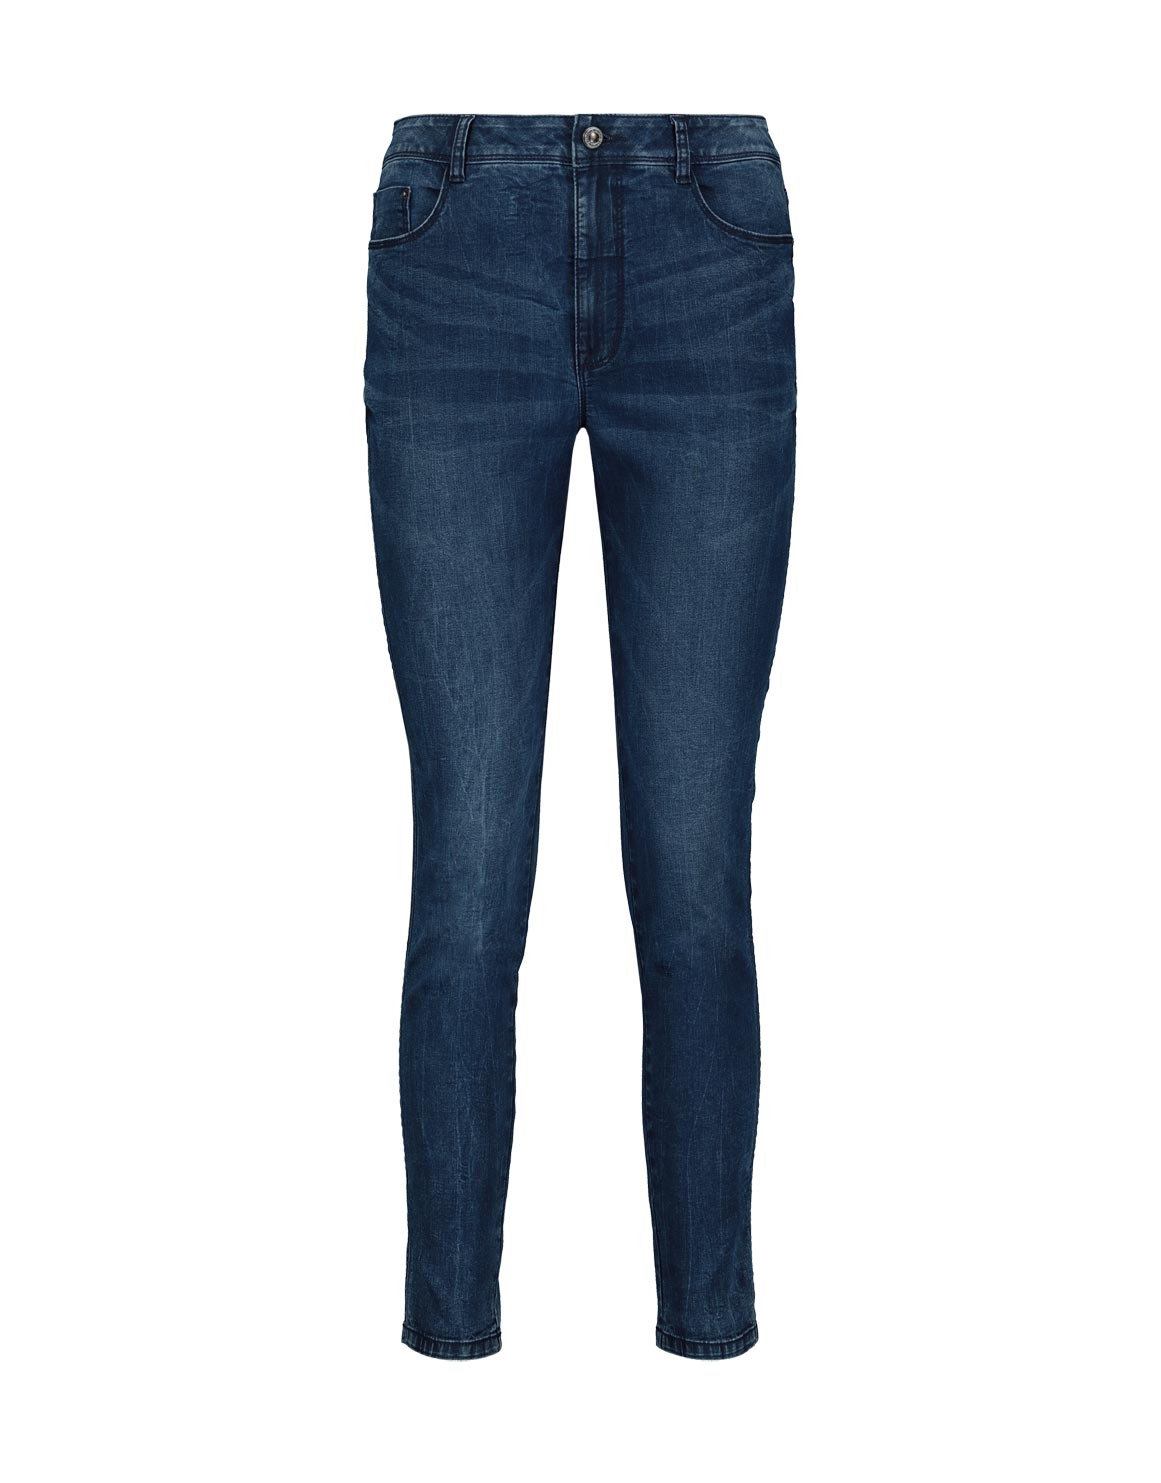 Skinny Jeans | Woolworths.co.za